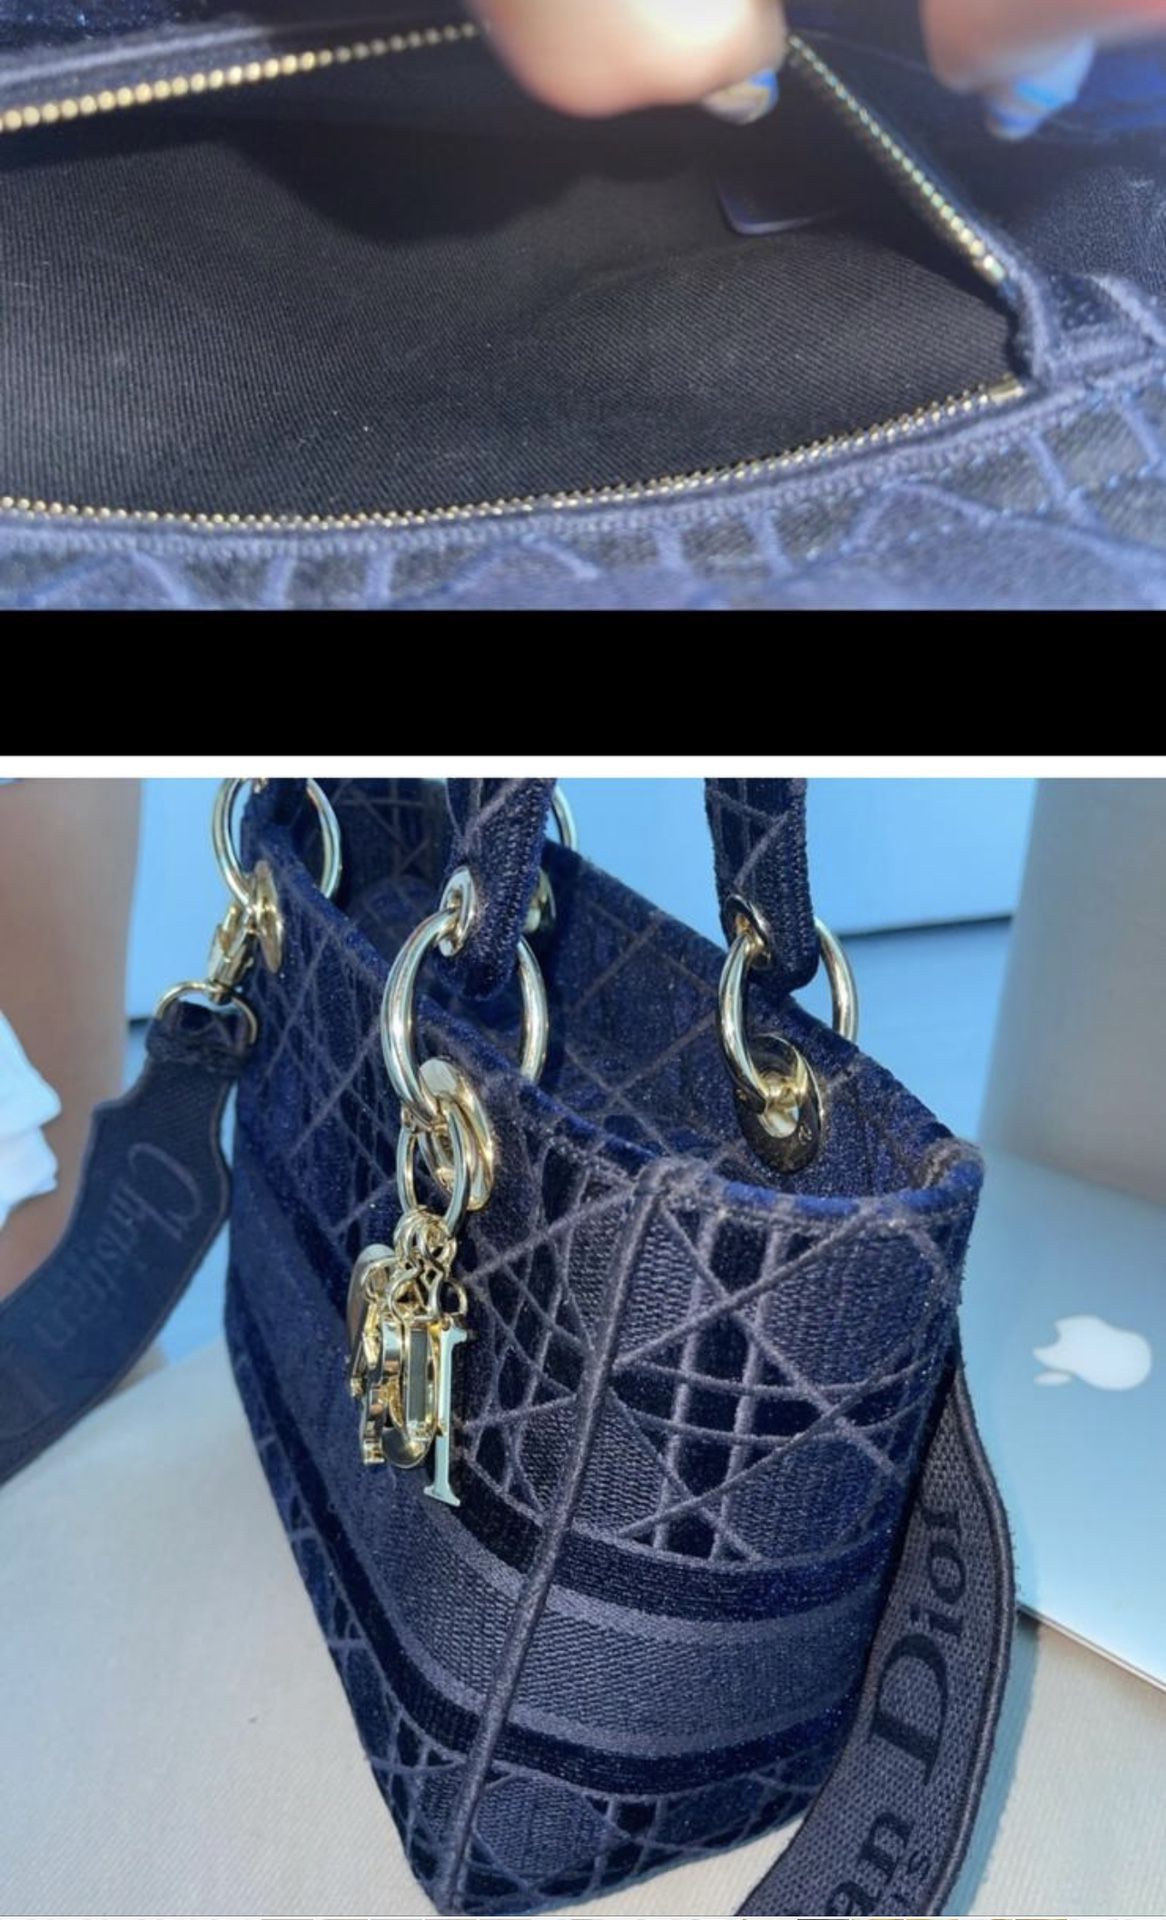 Dior Handbag 